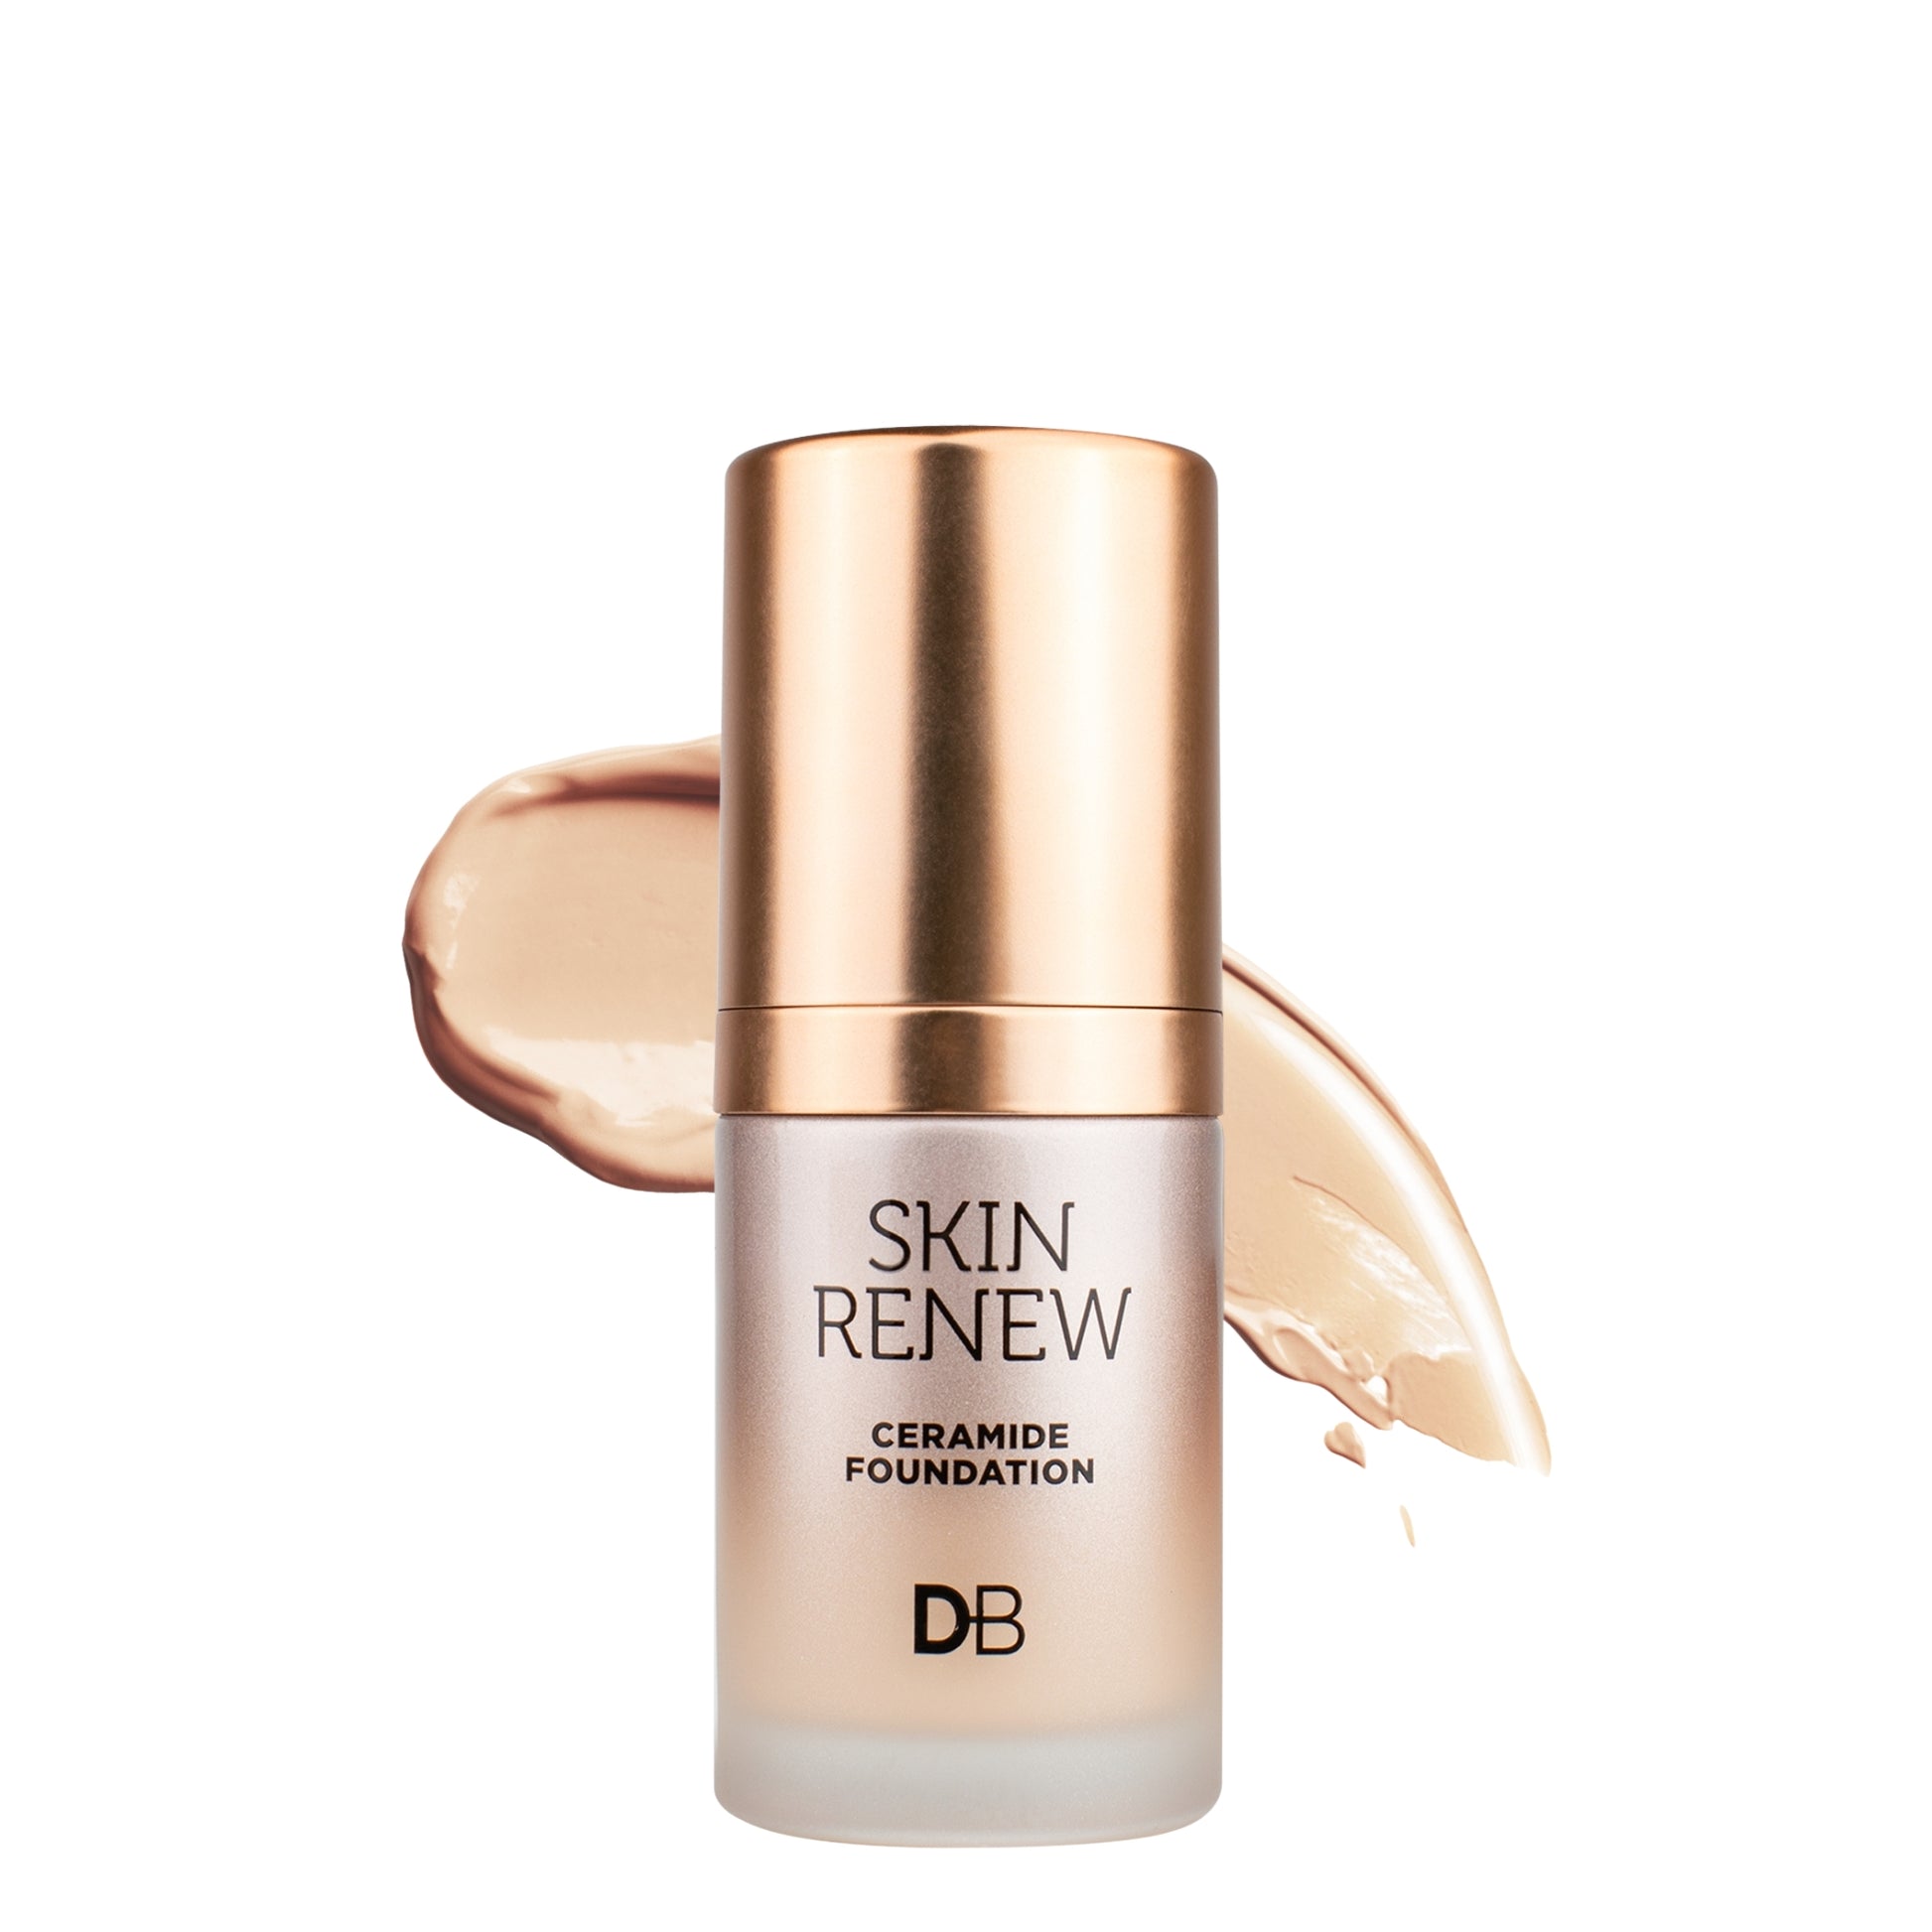 Skin Renew Ceramide Foundation (Light Sand) | DB Cosmetics